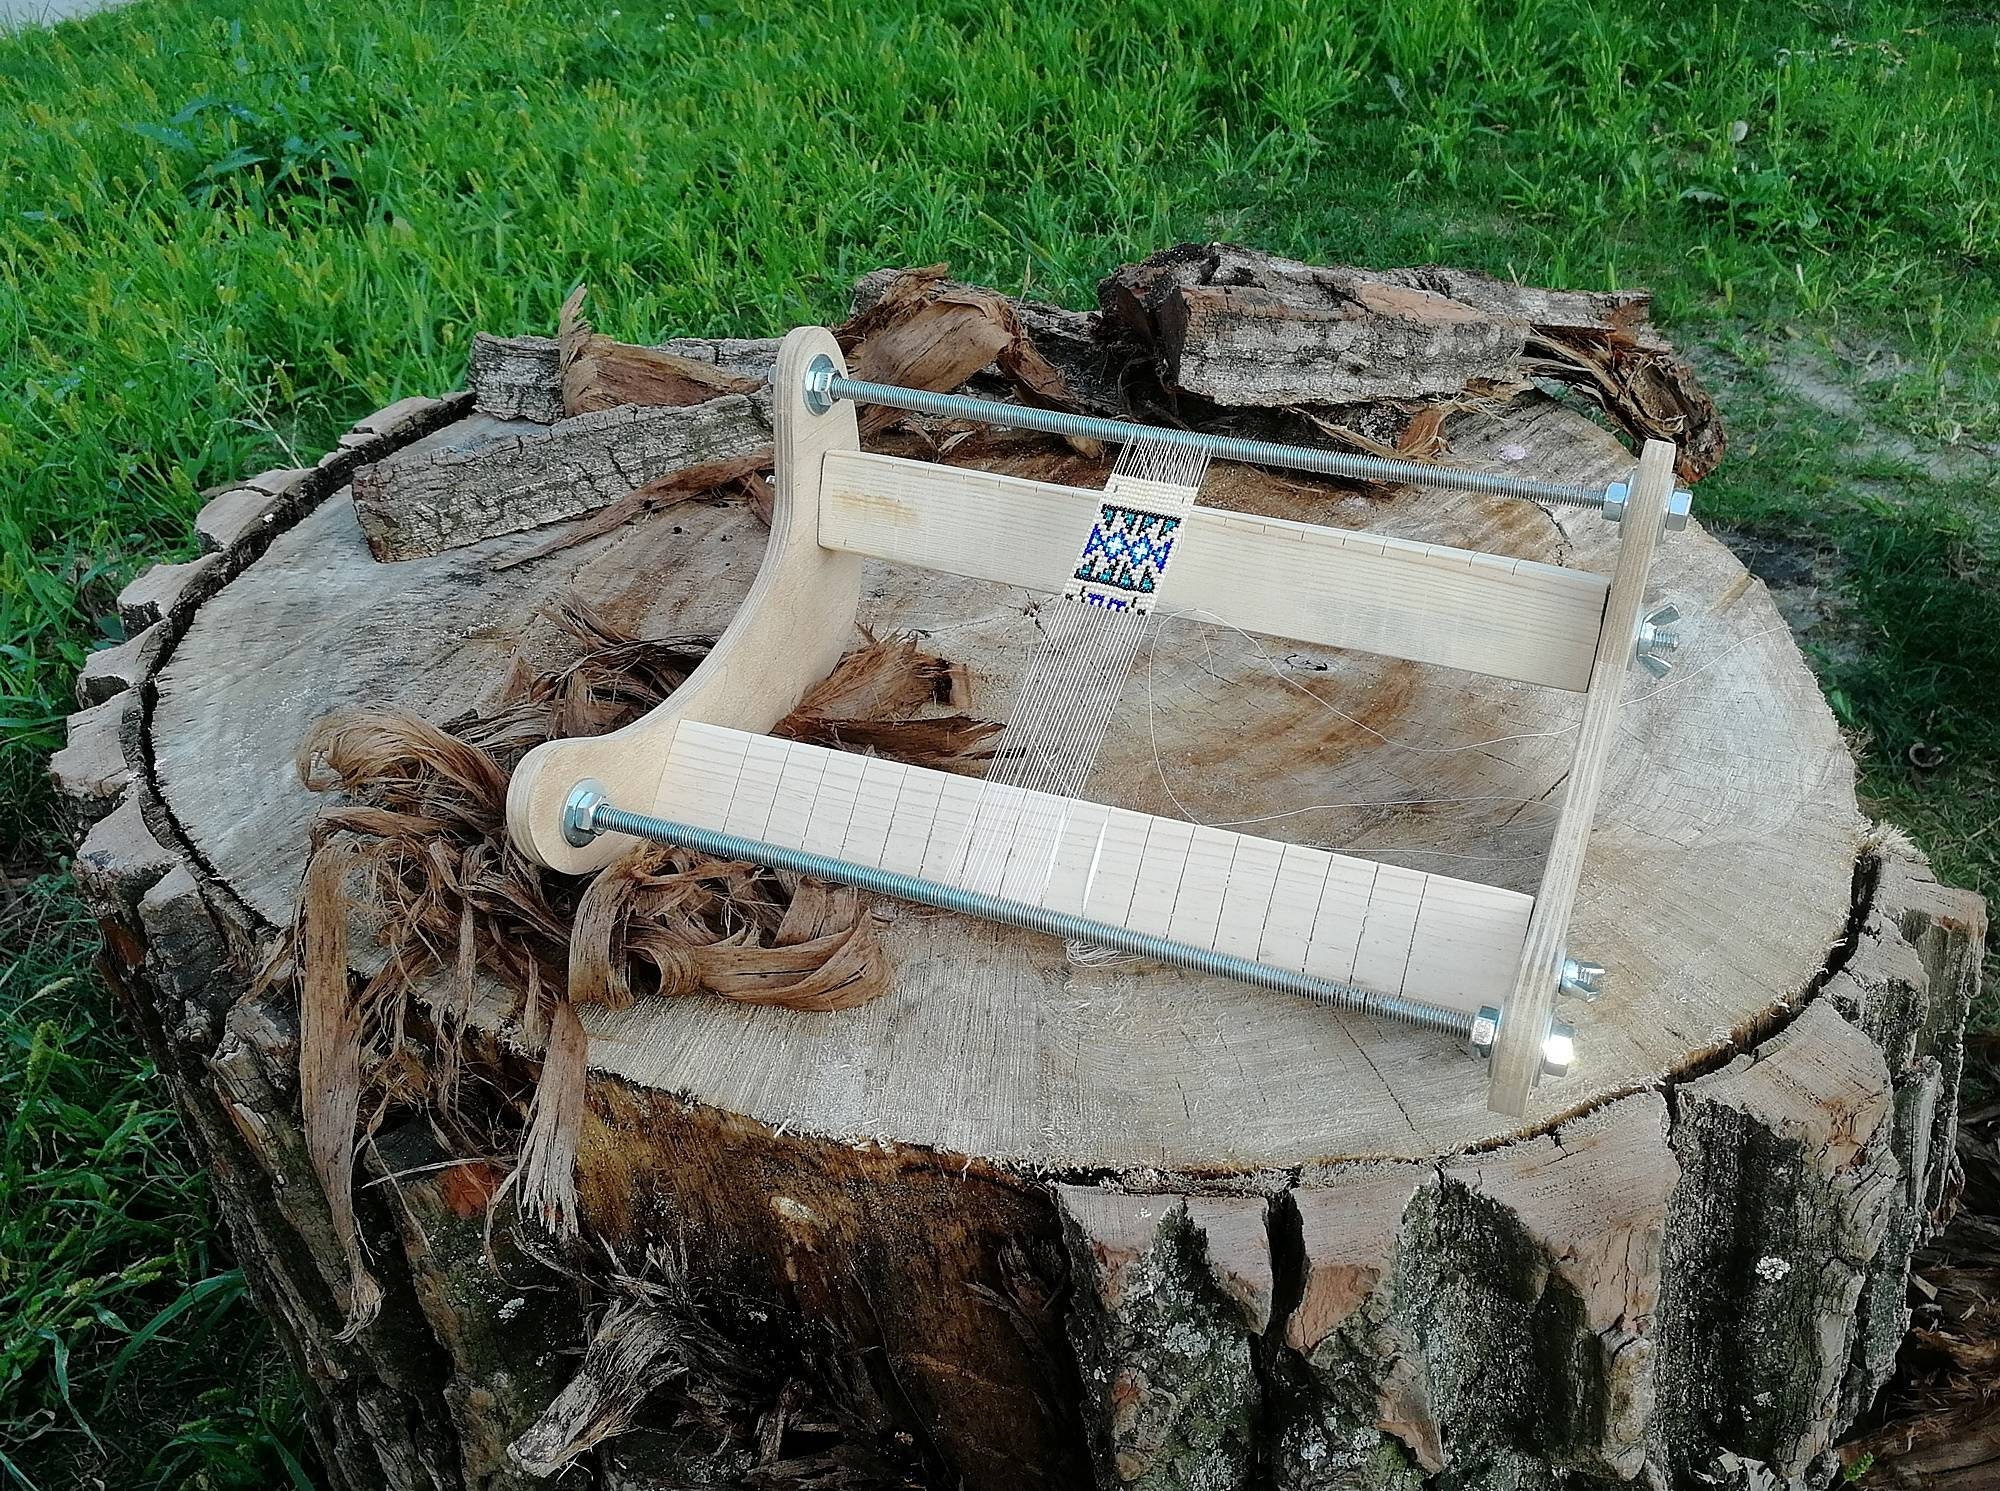 DIY Wood Weaving Beading Loom Kit for Jewelry Bracelet Handmade Knitting  Machine Wood Alloy Material Hand Tool Set J99Store